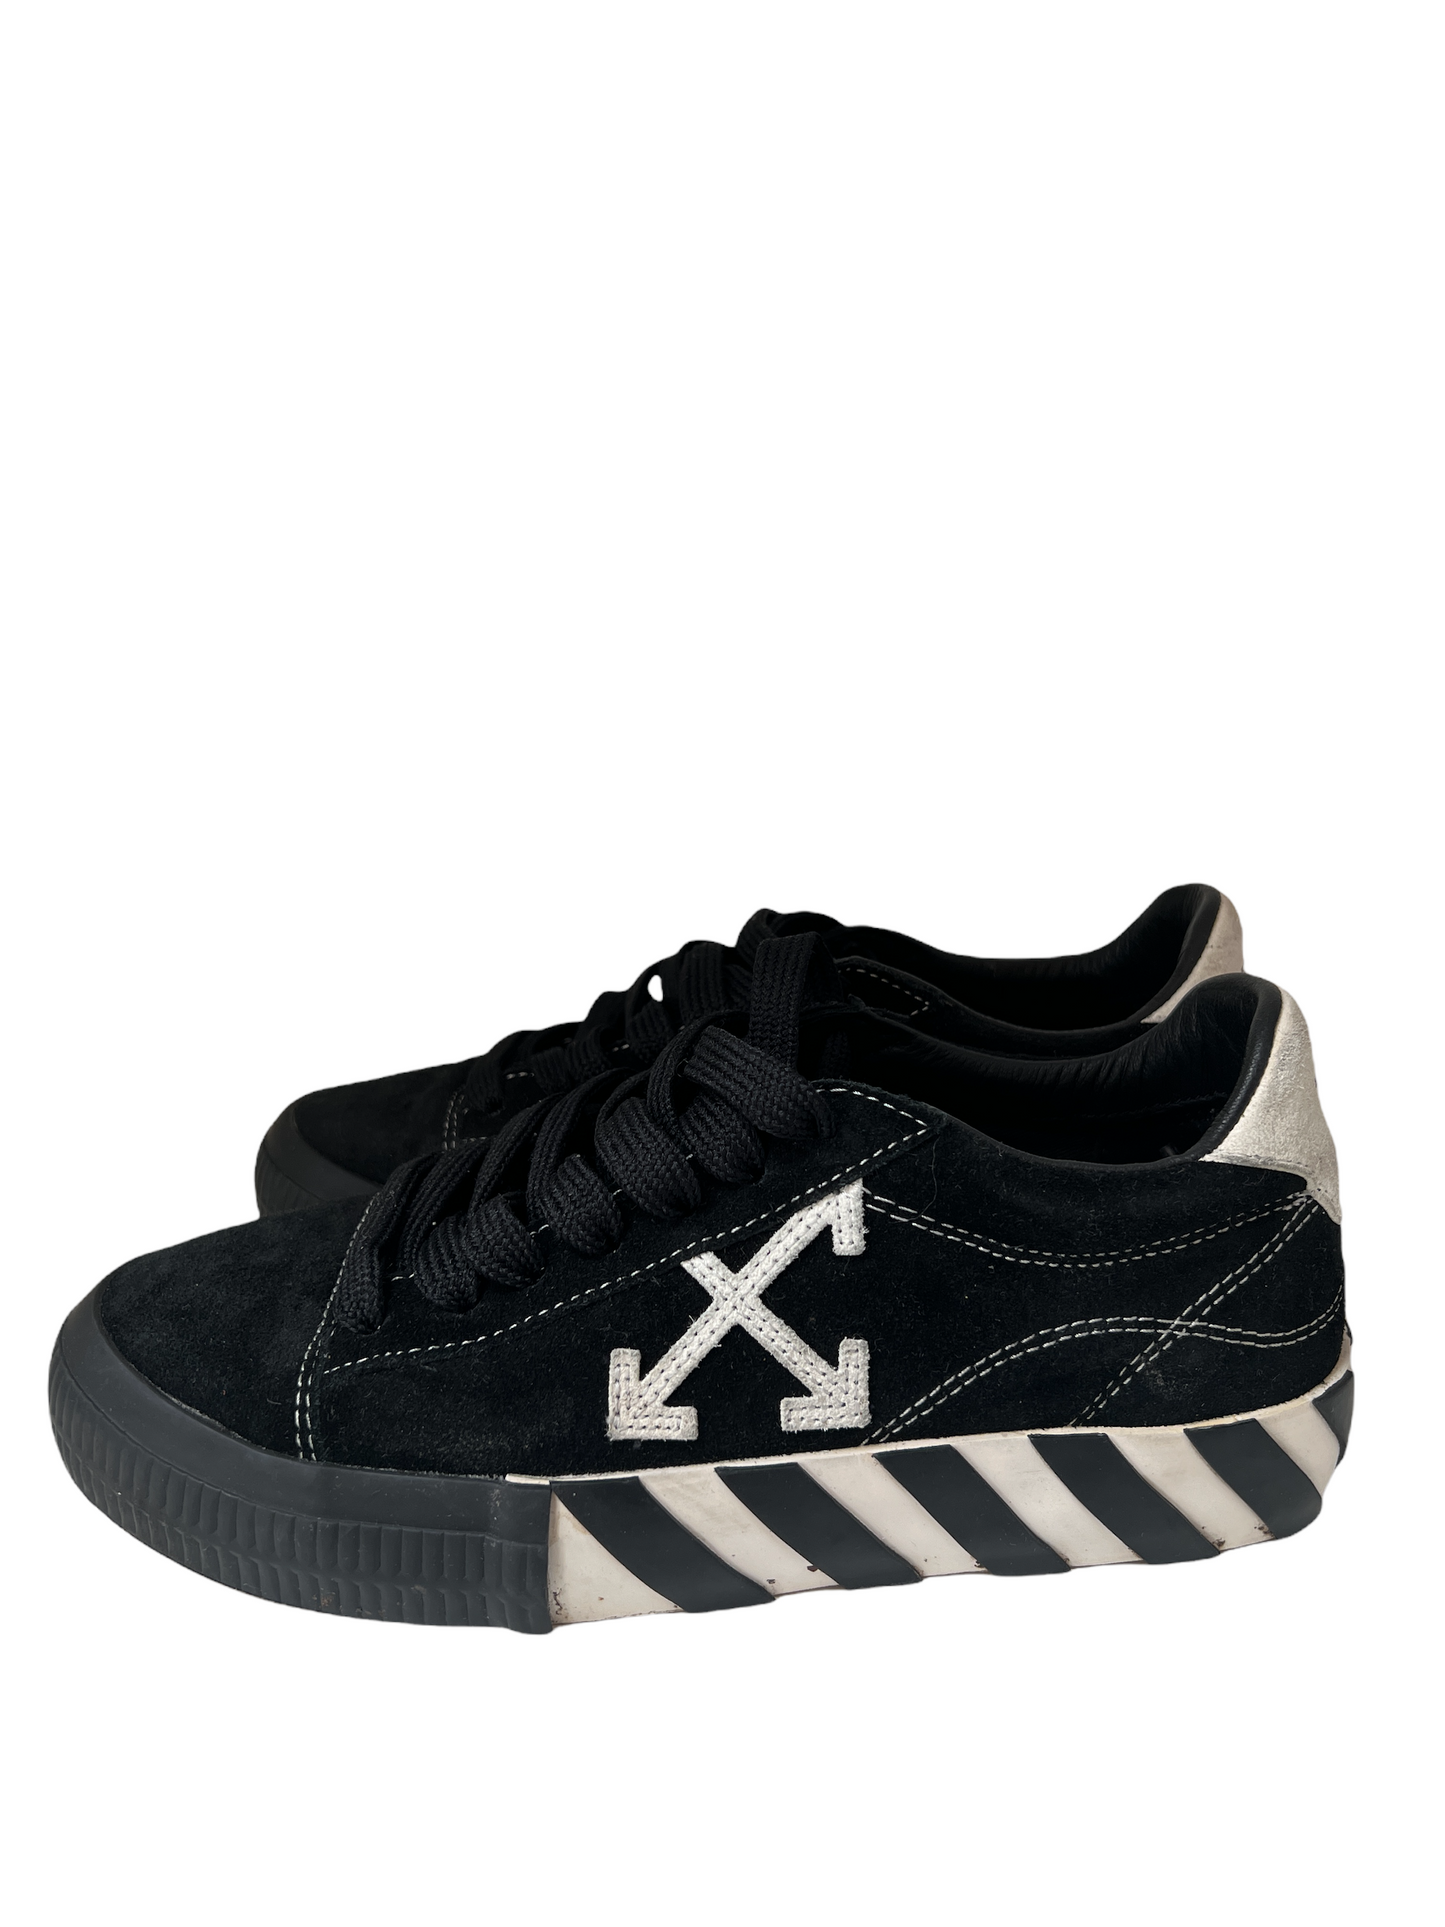 Black & White Sneakers - 8